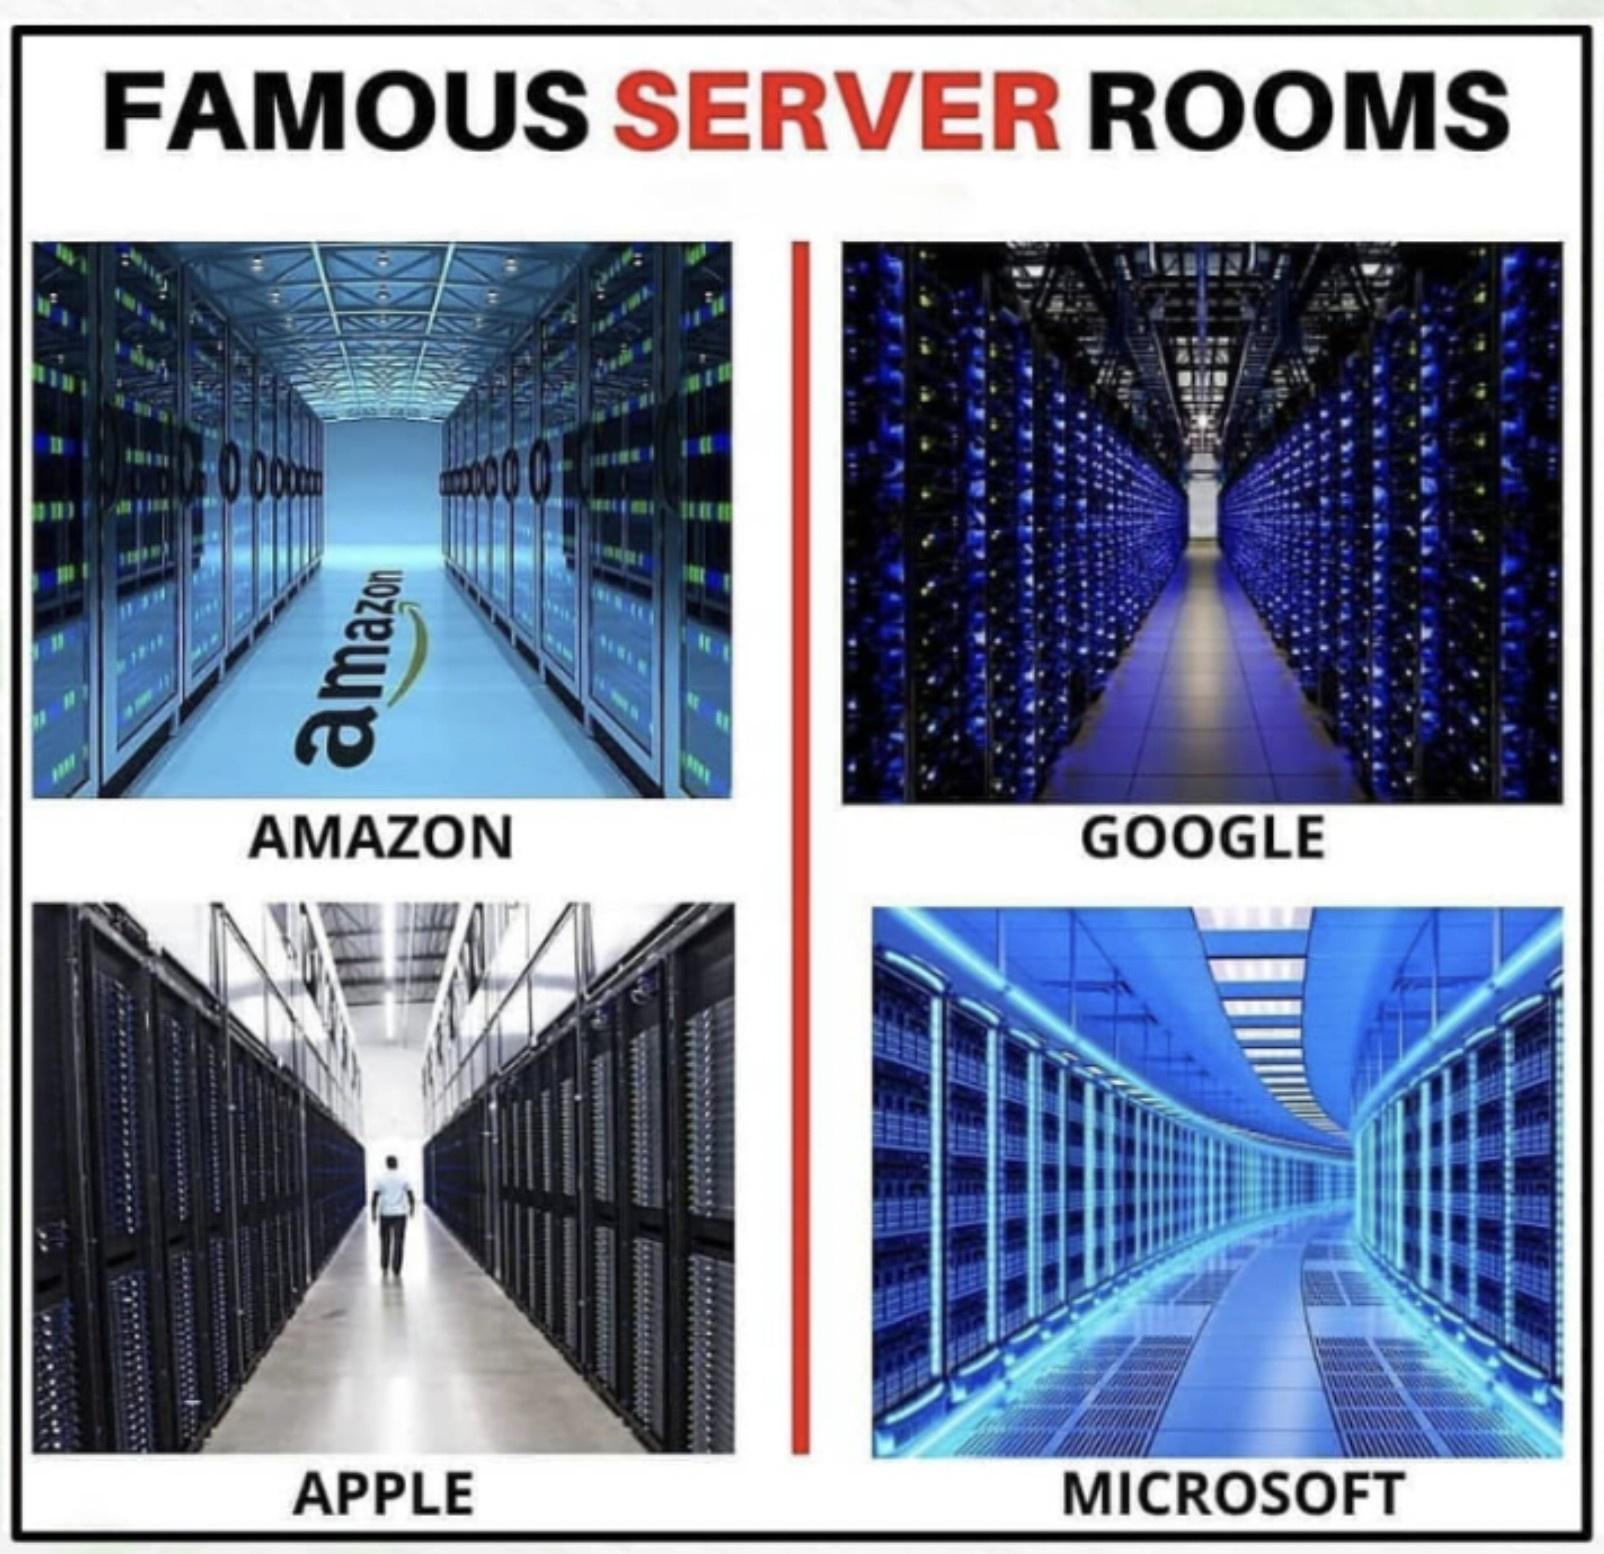 famous server rooms - Famous Server Rooms amazon Amazon Google Apple Microsoft